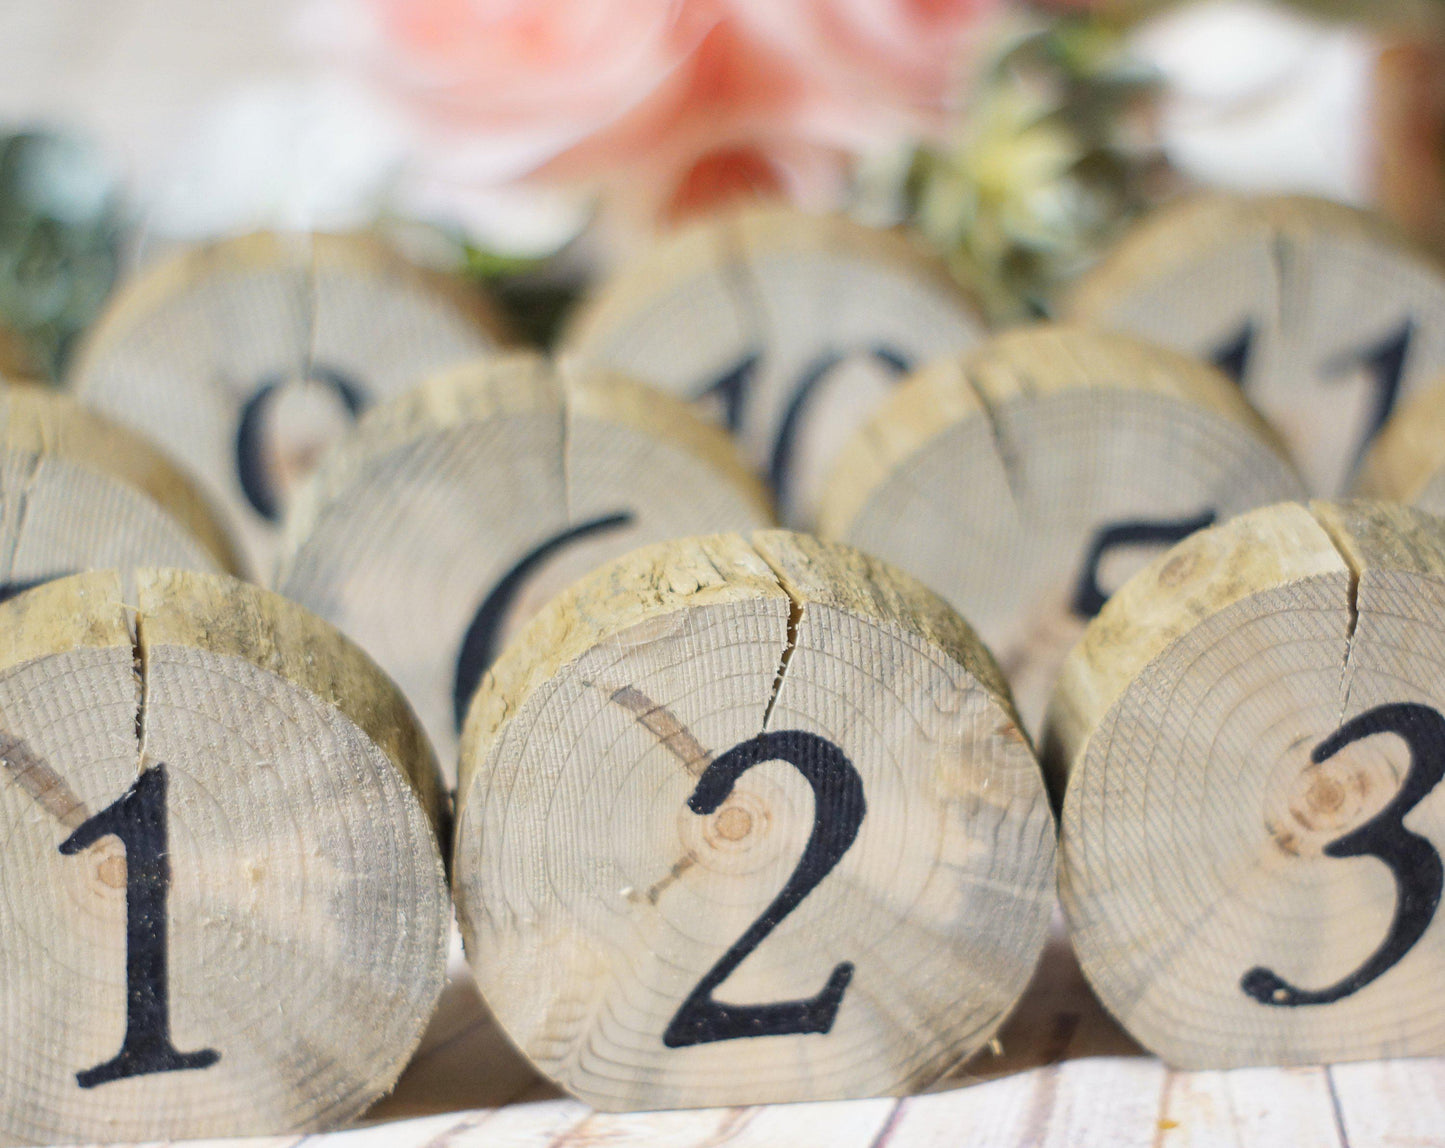 Table Numbers, Rustic Wedding, Wooden Numbers Log Slice-Wedding-GFT Woodcraft